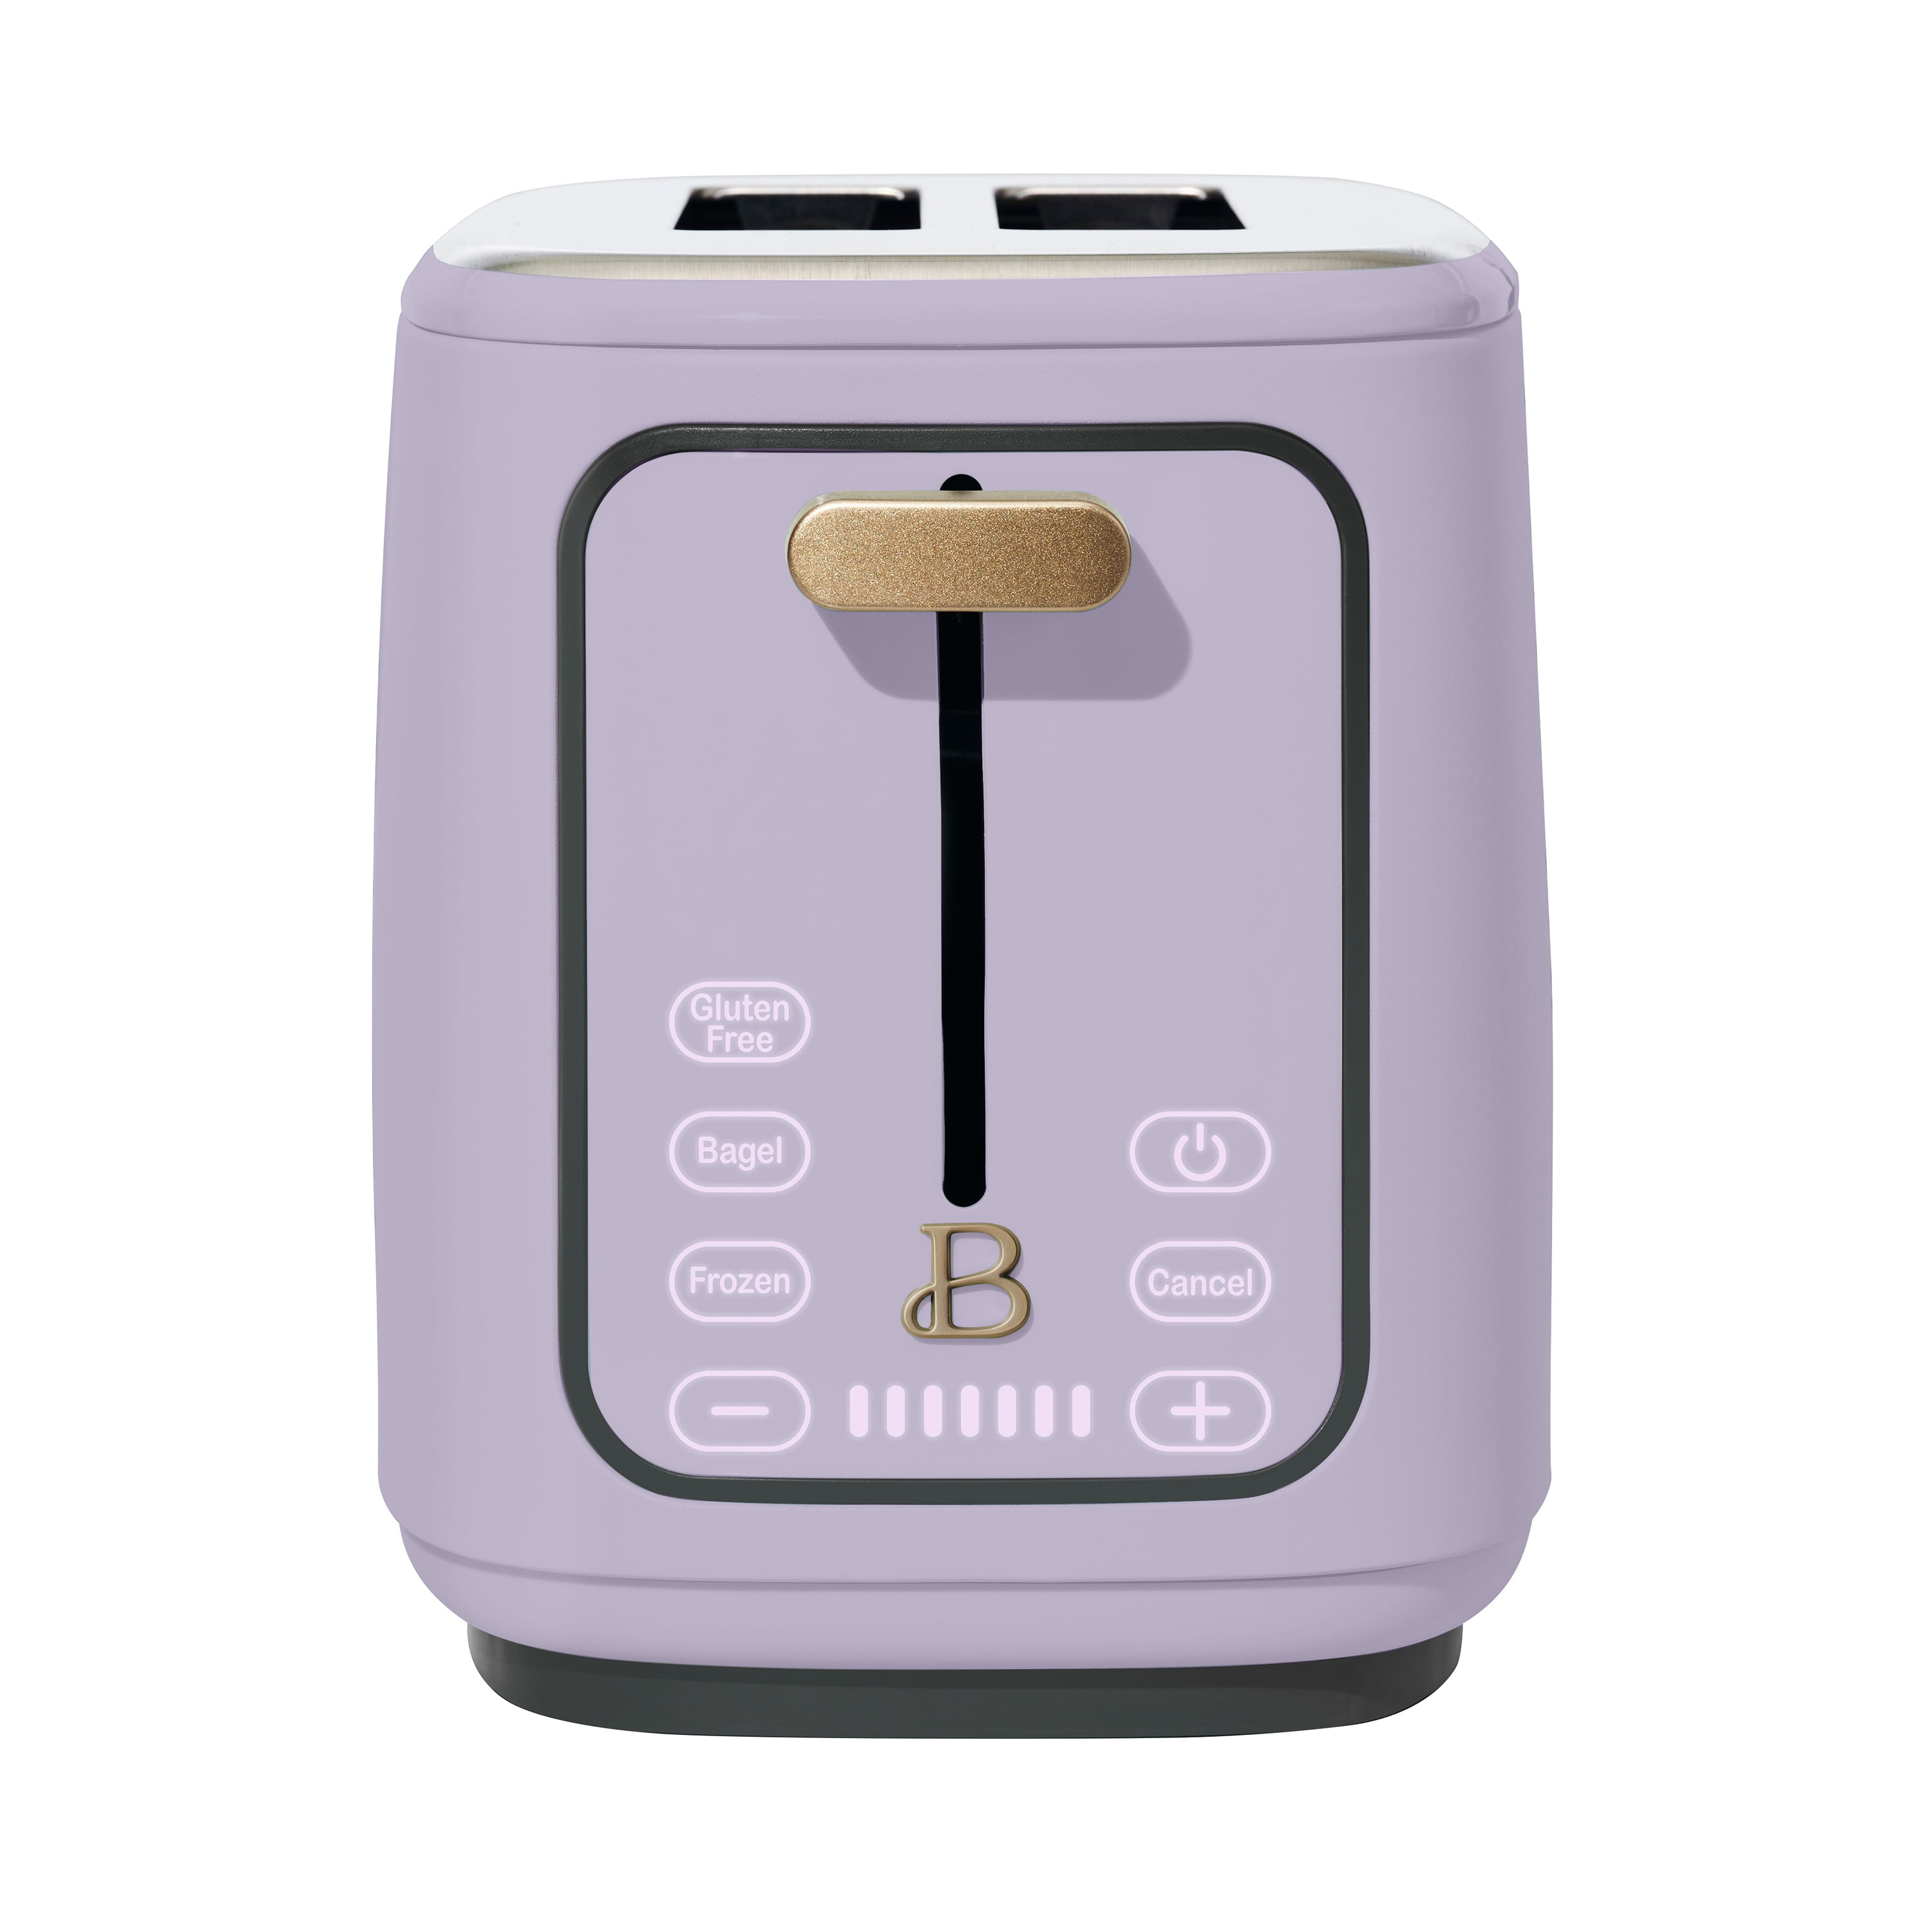 brian gallardo share toaster from flavor of love photos